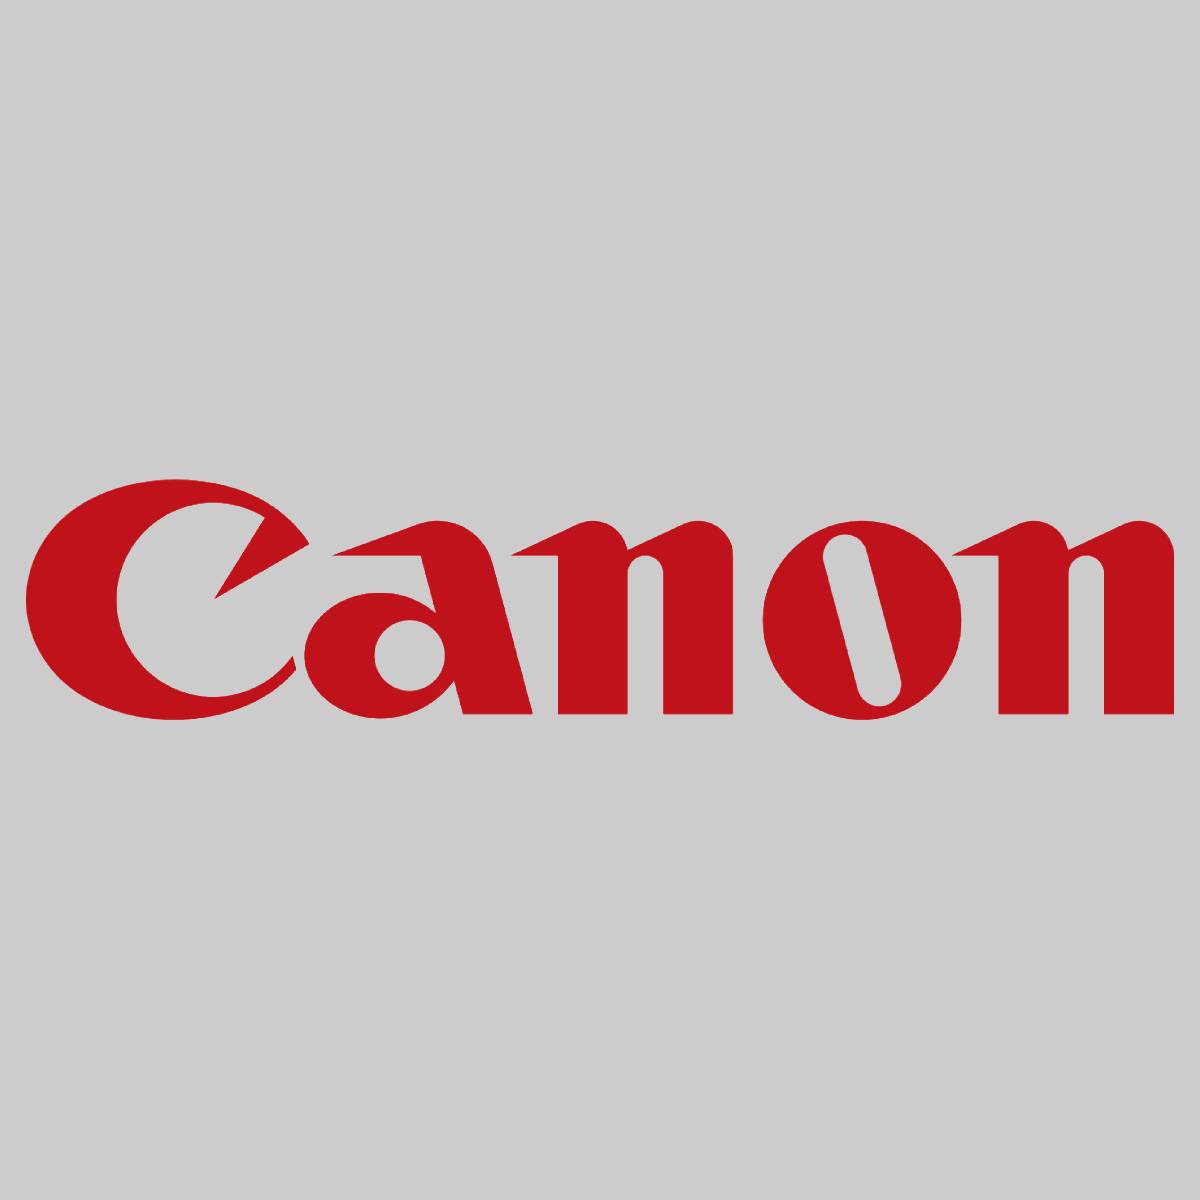 "Original Canon Delivery Electrodstatic Filte FC5-9988-000 iP C7000VP C7010VP